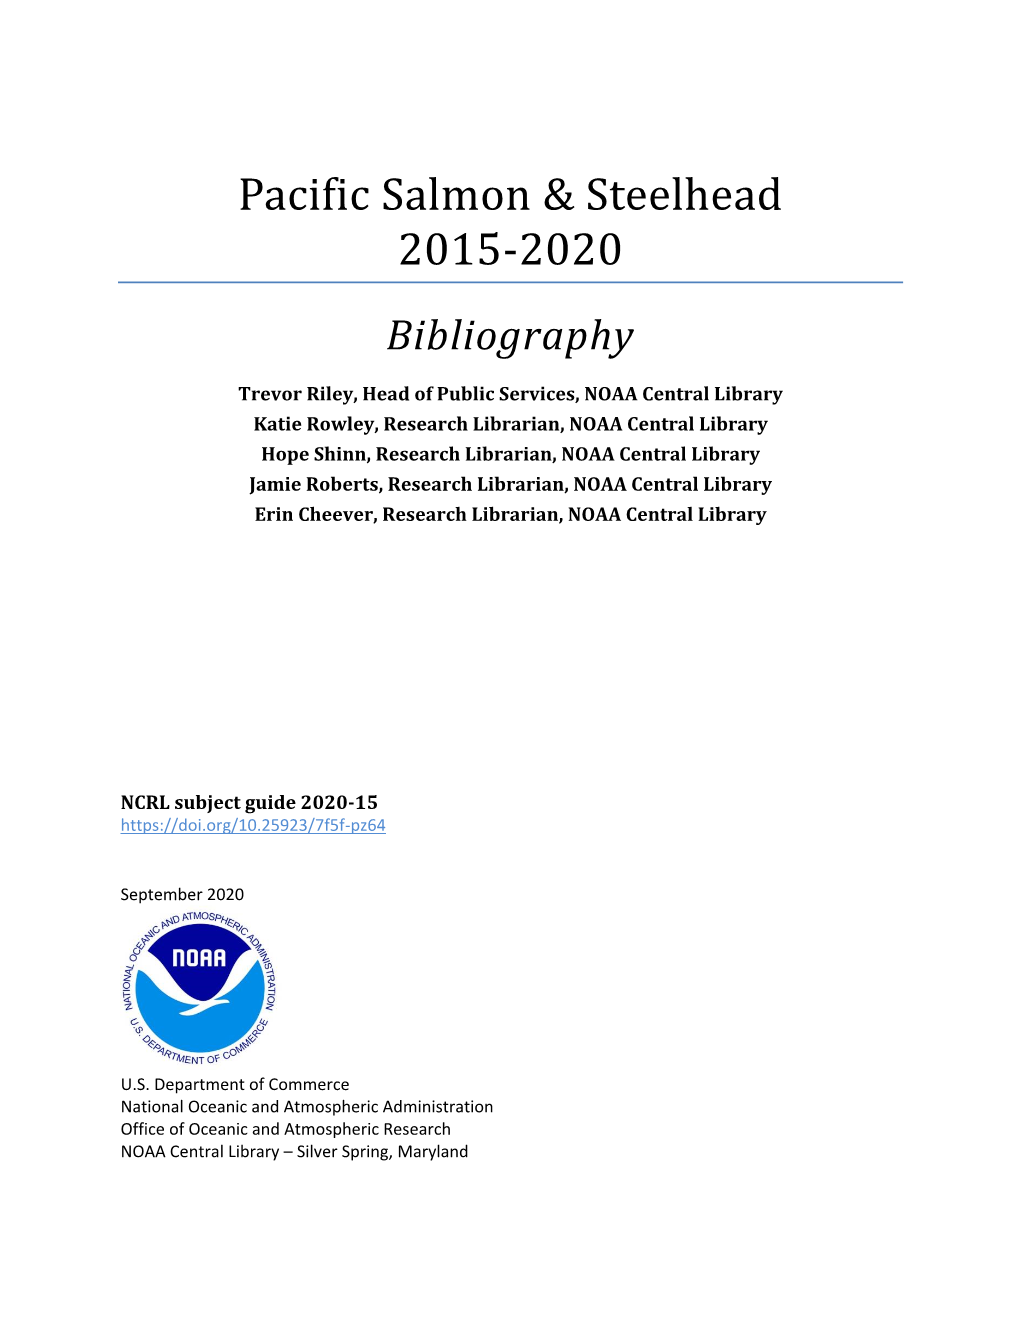 Pacific Salmon & Steelhead 2015-2020